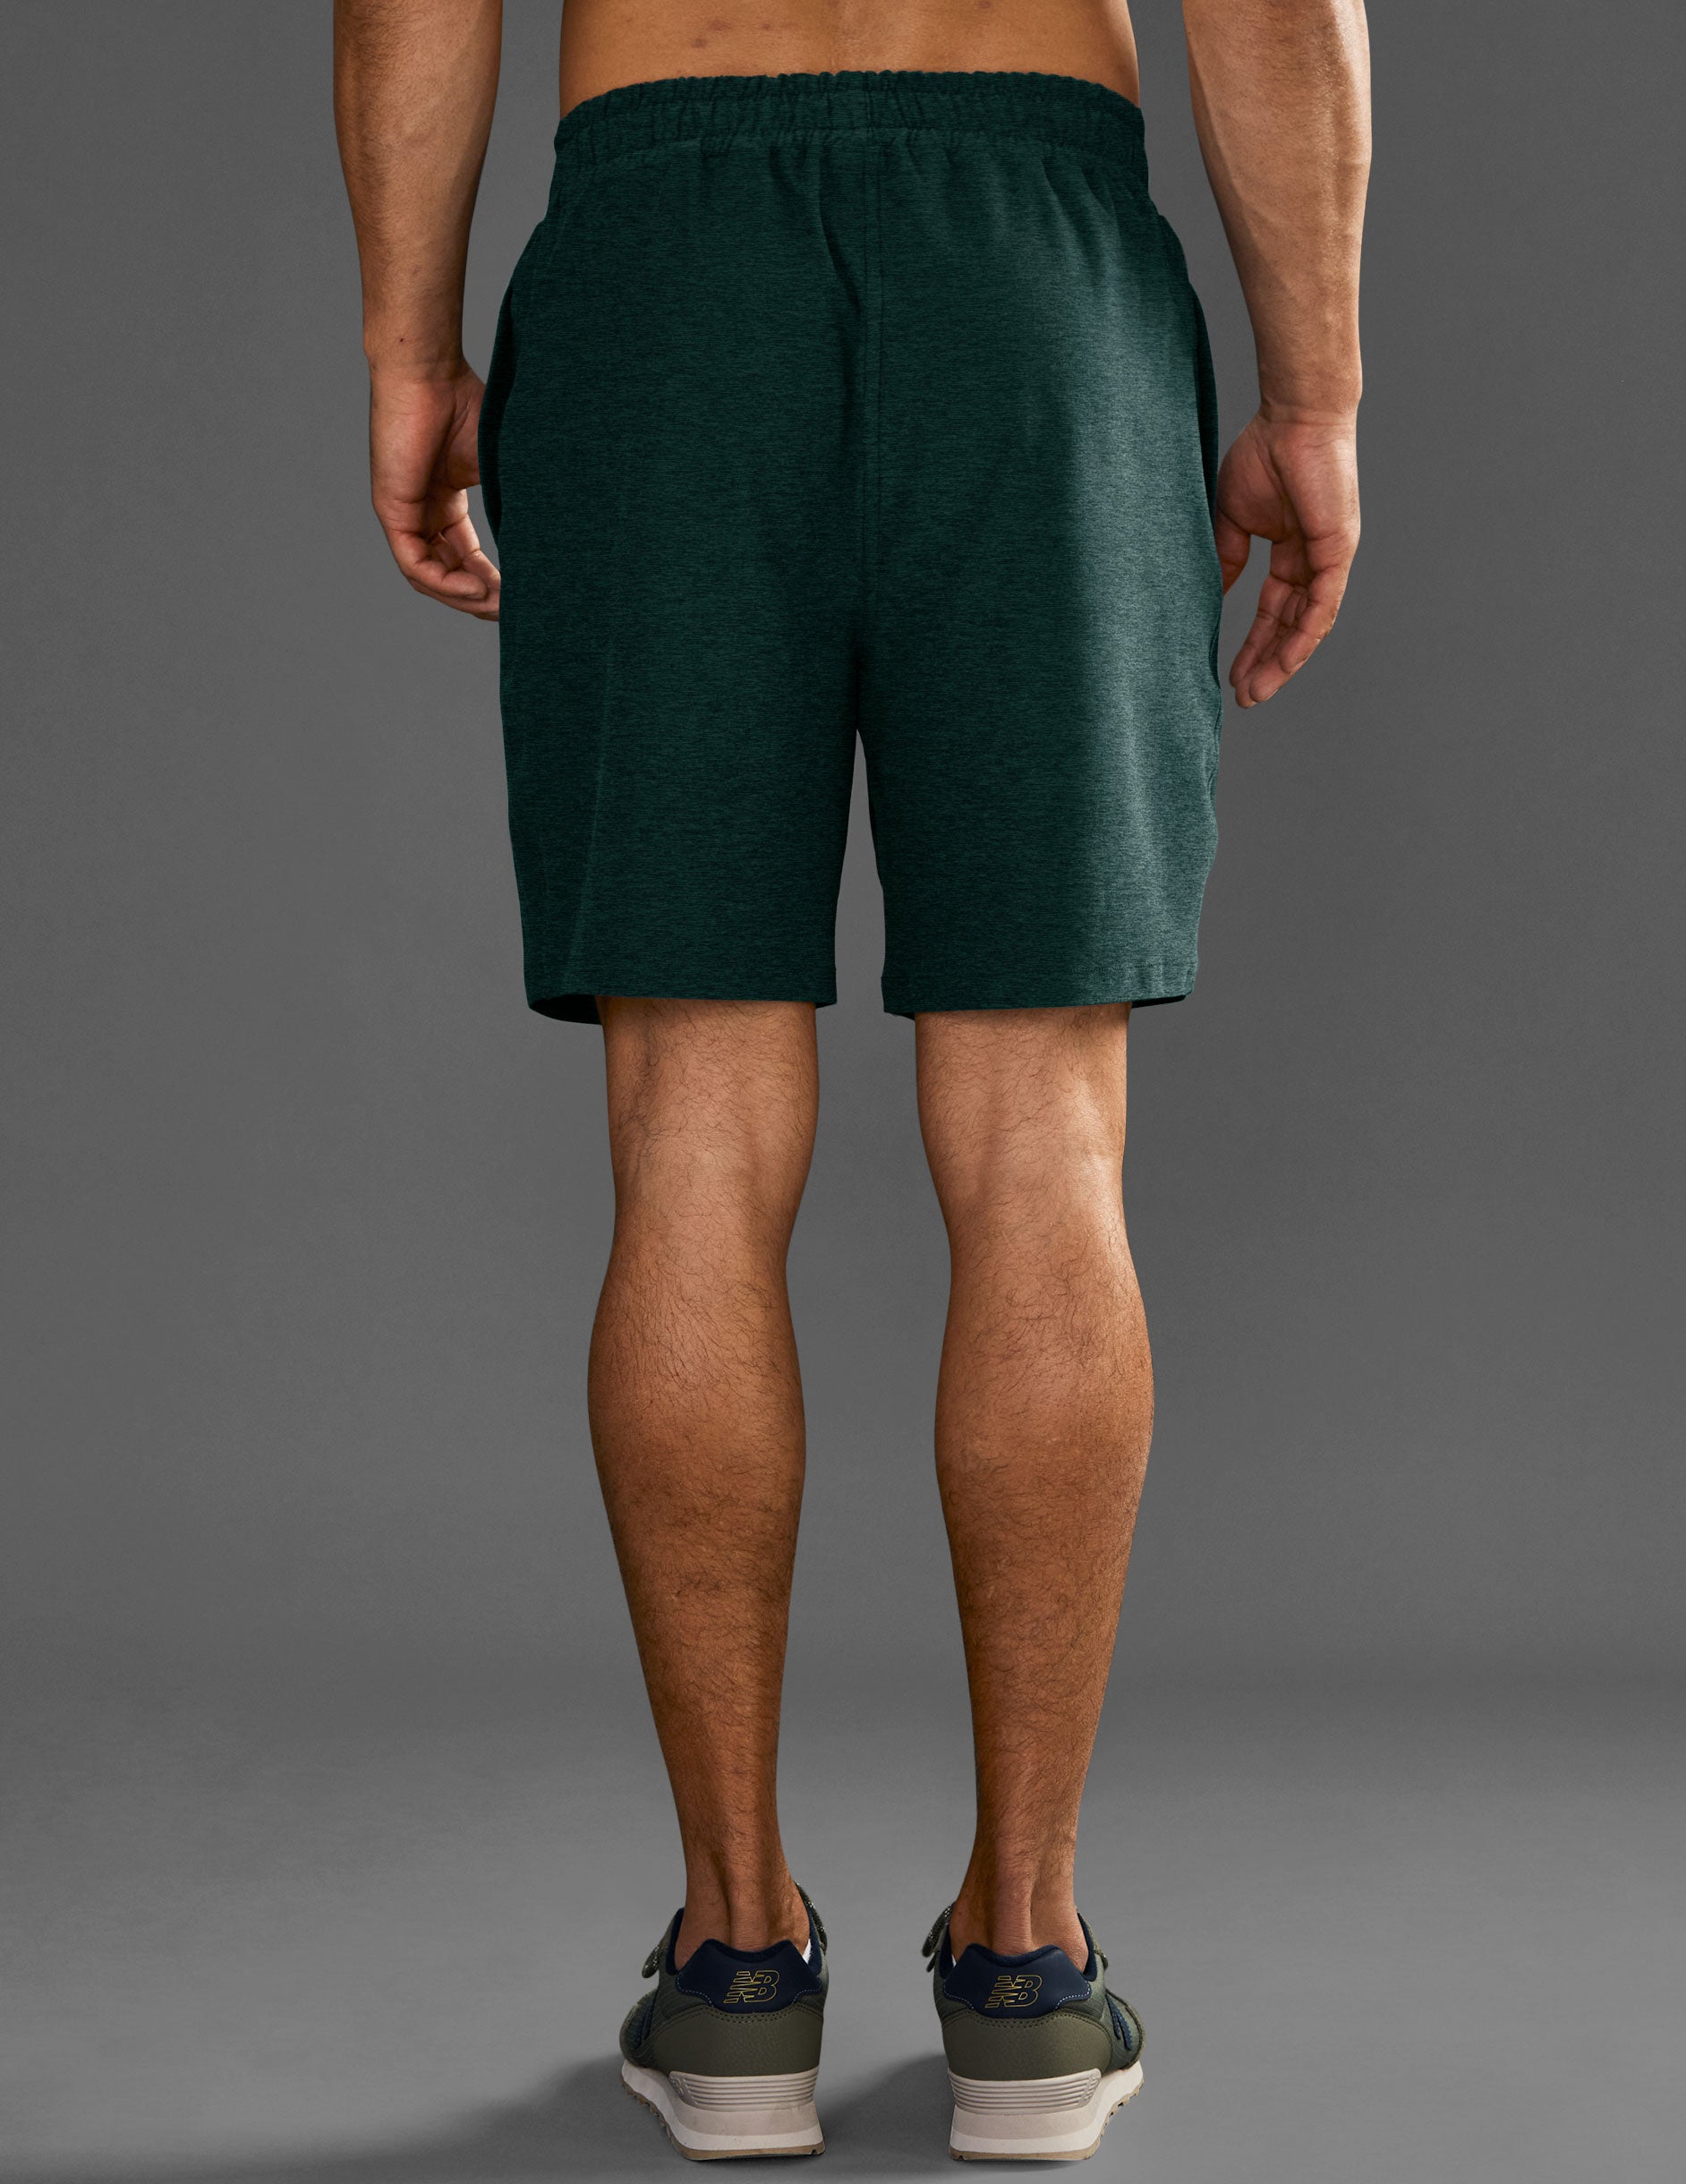 green men's shorts. 